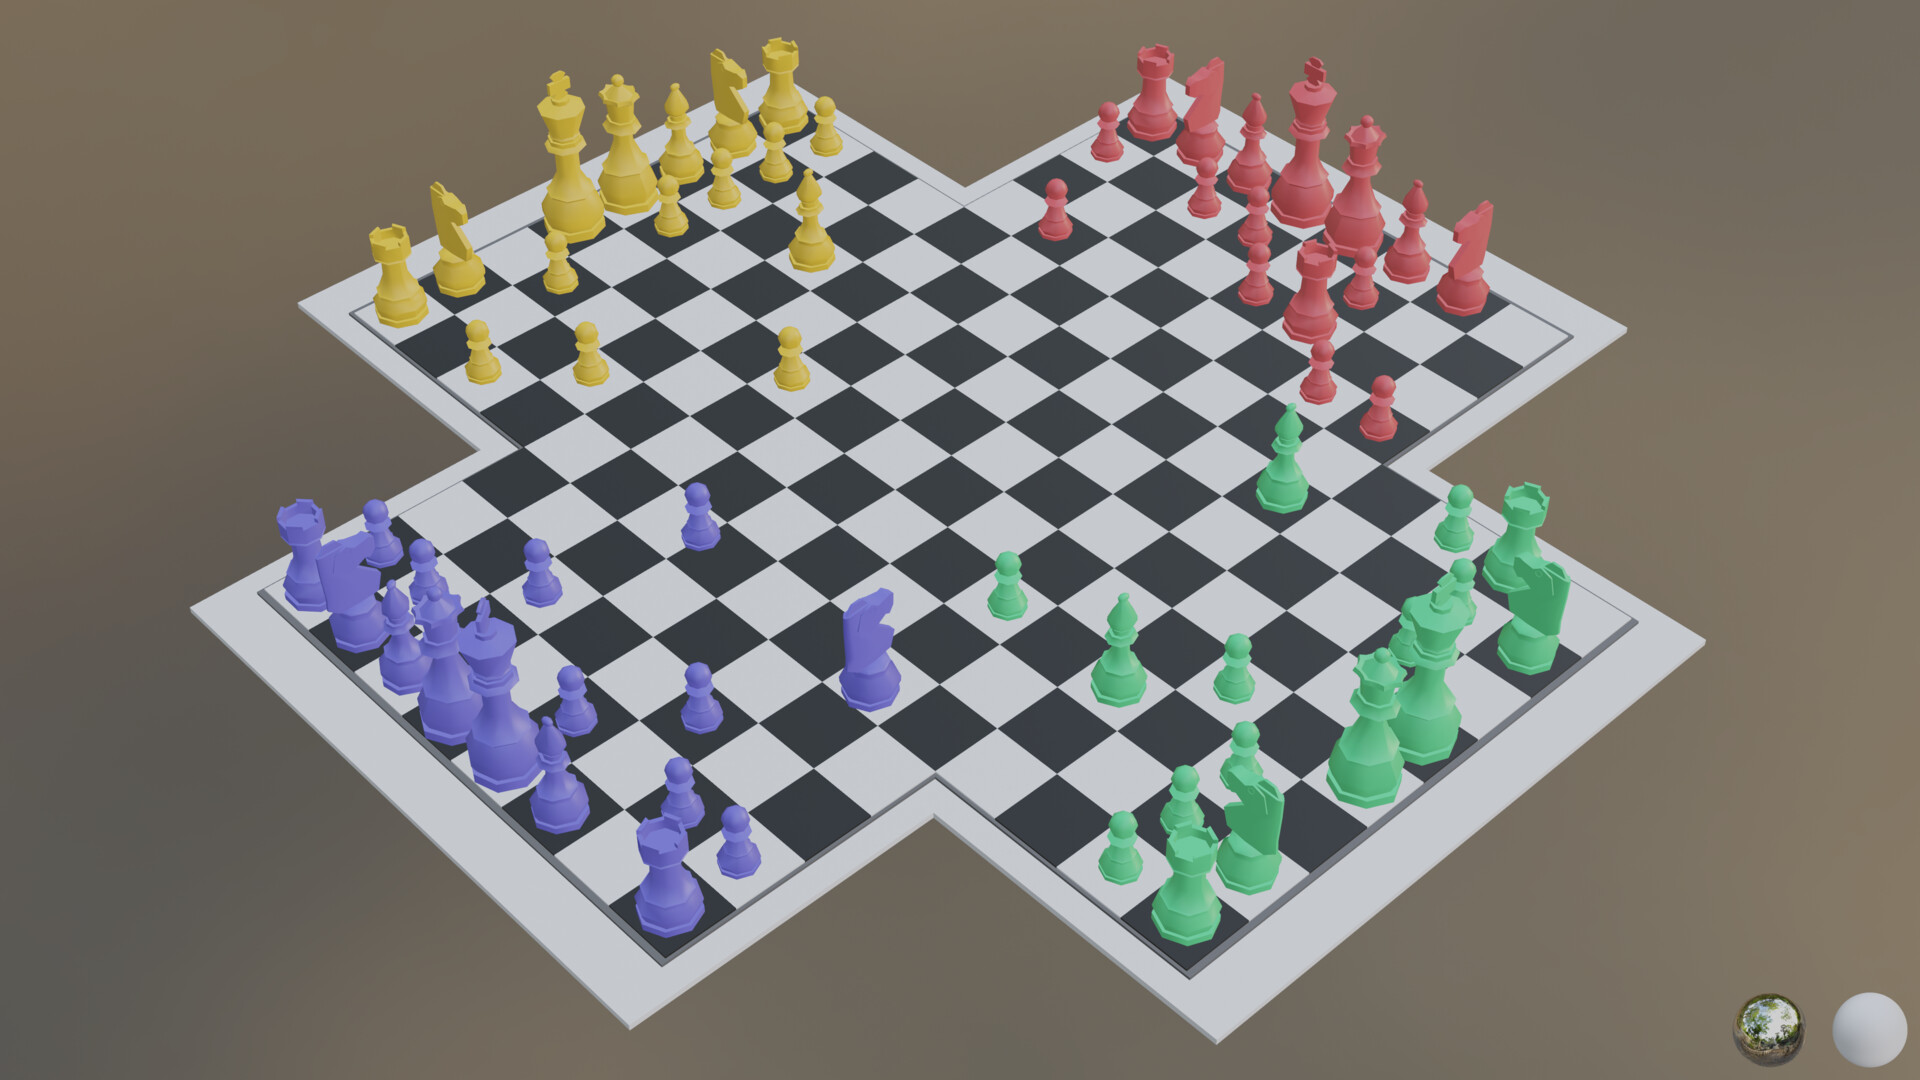 4 player chess